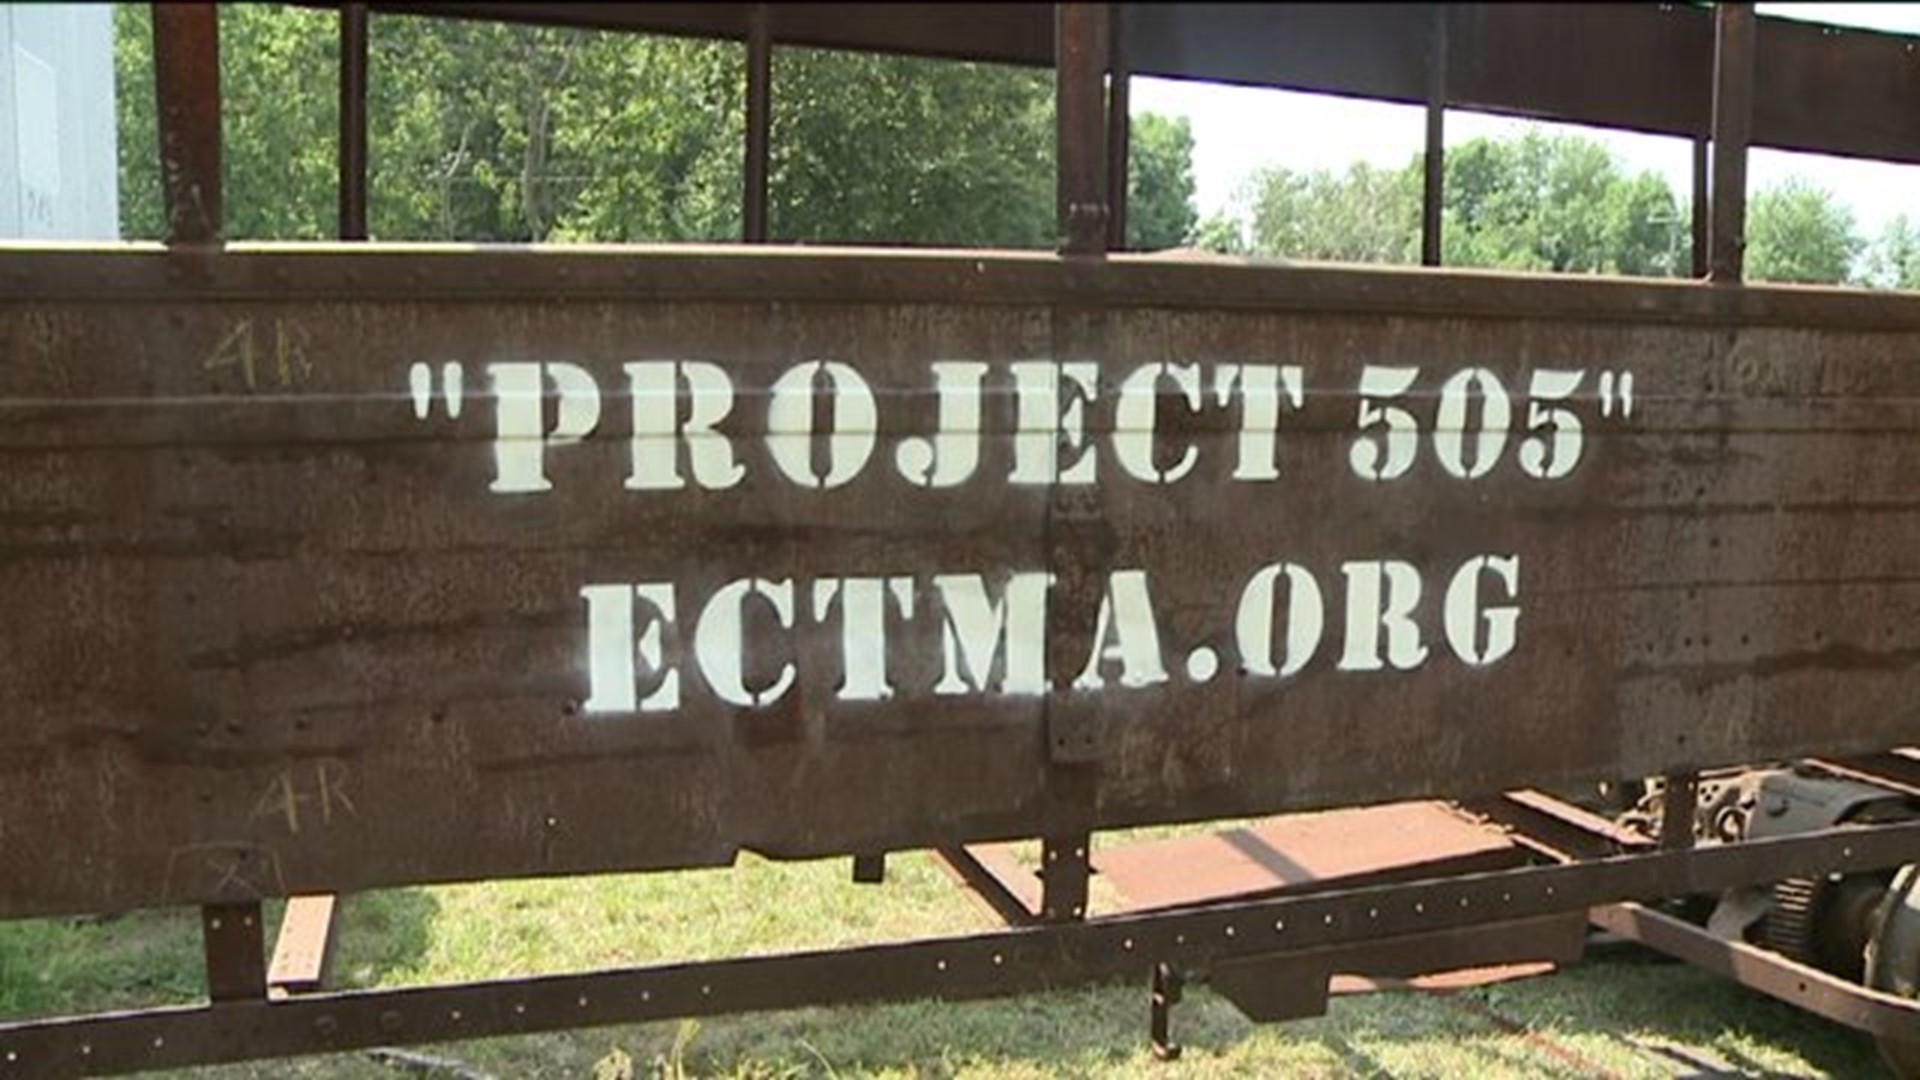 "Project 505 Restoration Begins